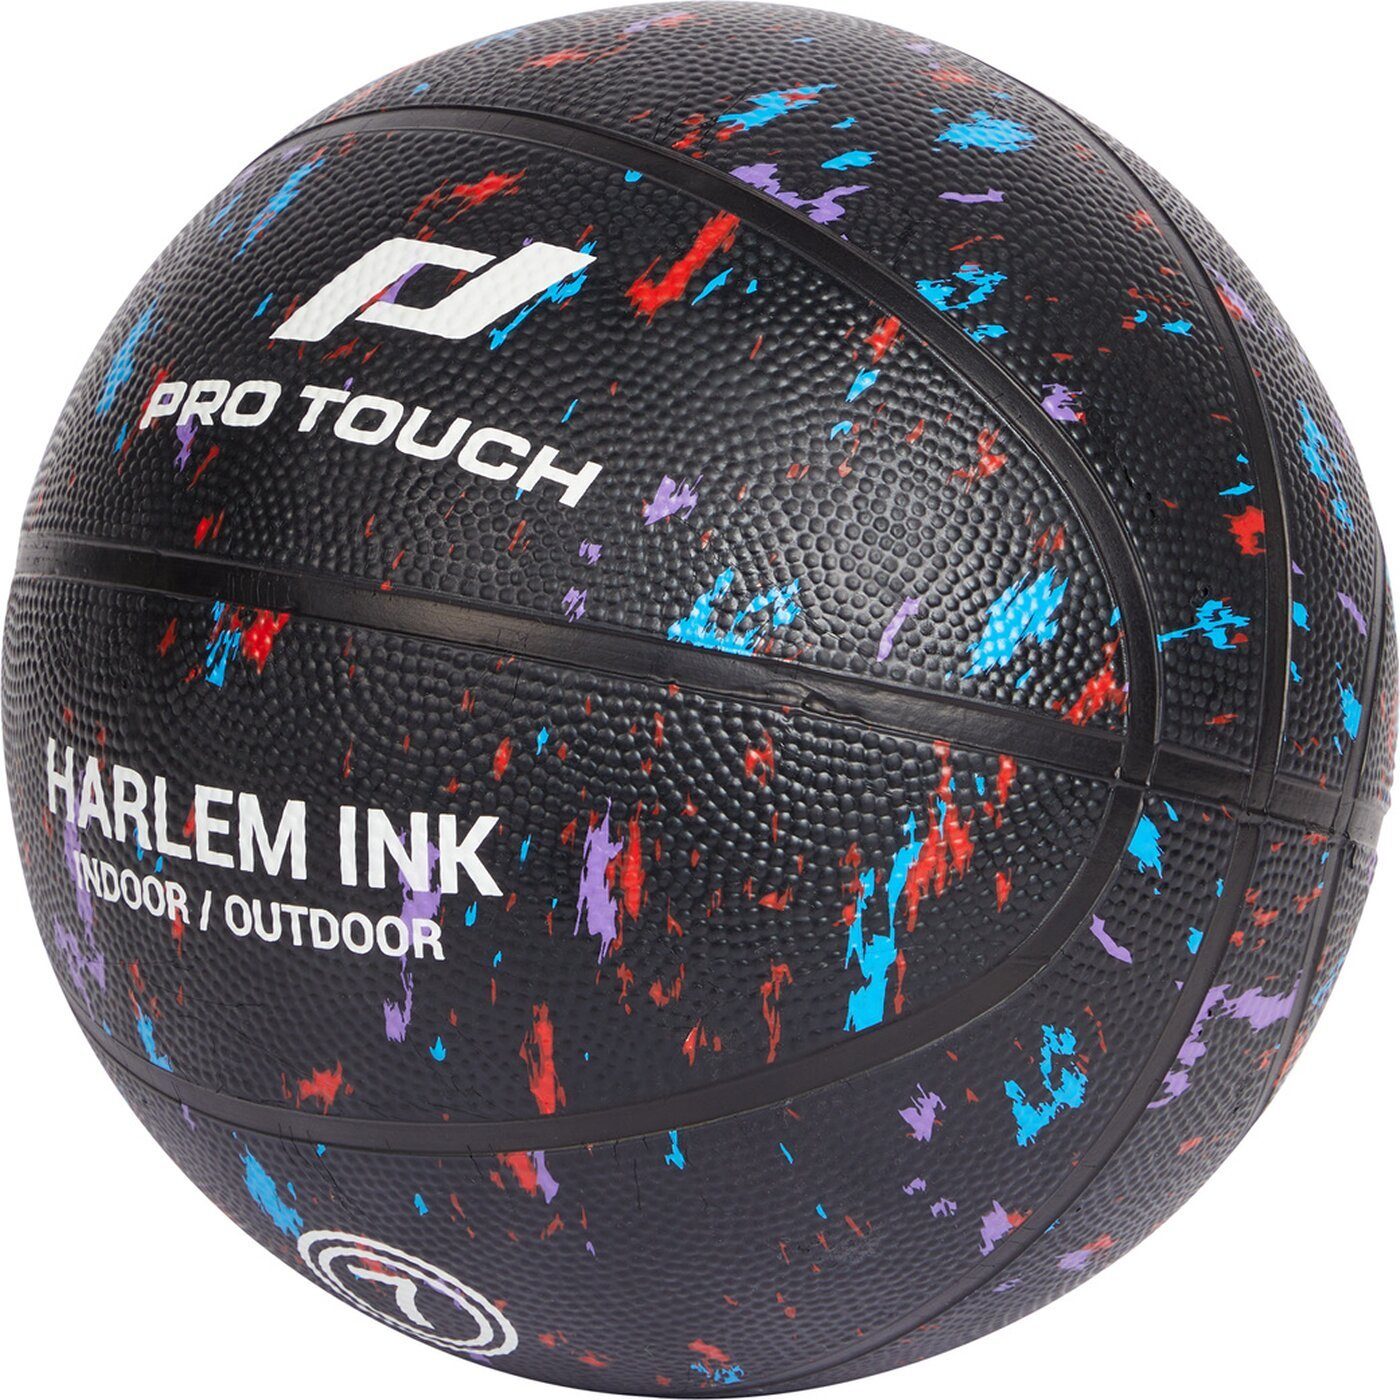 Pro Touch Basketball Basketball Harlem Ink NAVY/ROSE DARK